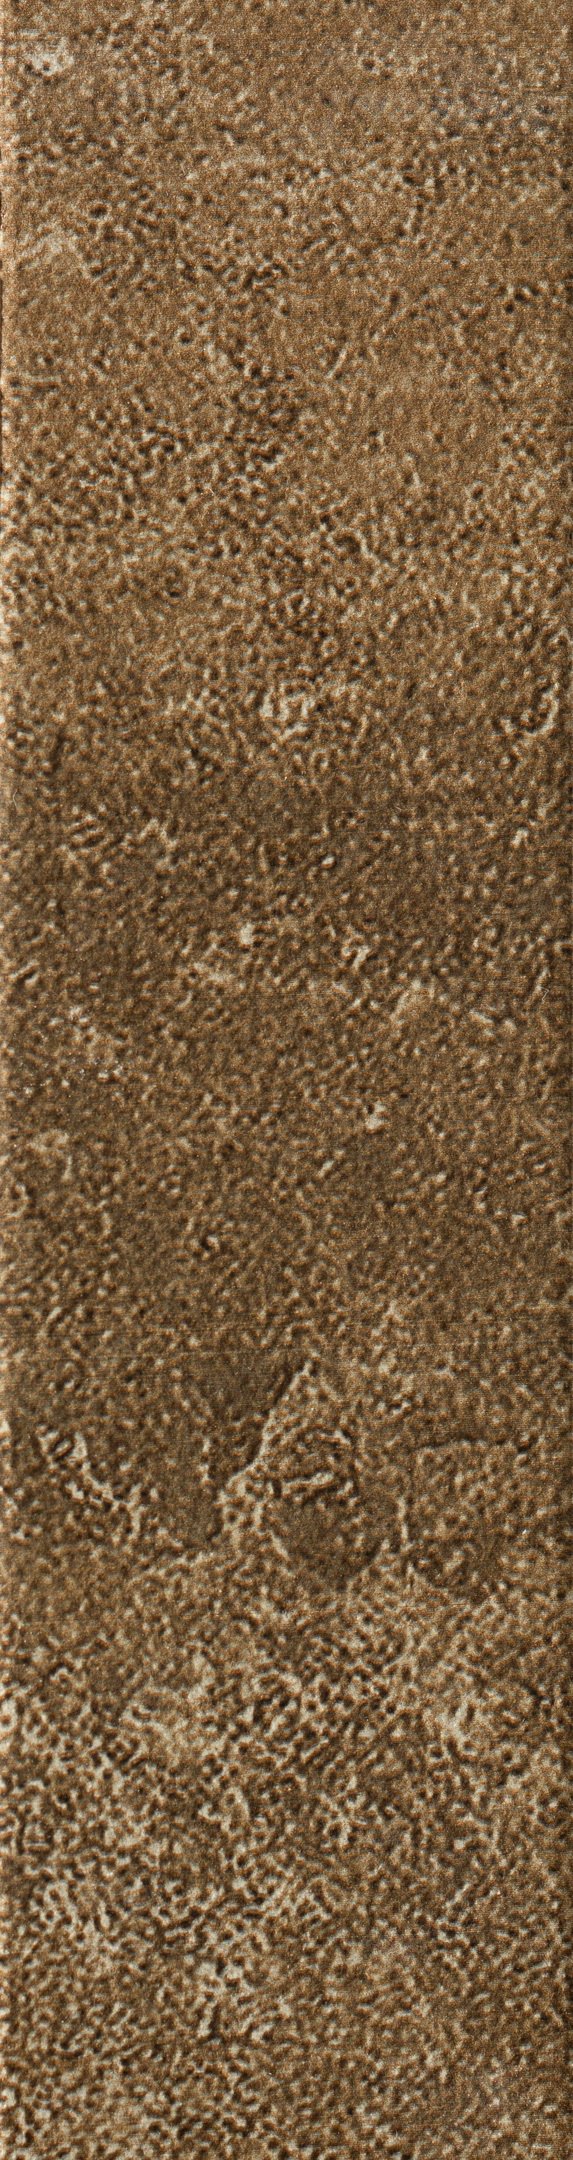 Клинкерная плитка Керамин Юта 4 коричневая 245х65х7 мм (34 шт.=0,54 кв.м) клинкерная плитка юта 4 коричневый 24 5х6 5 керамин